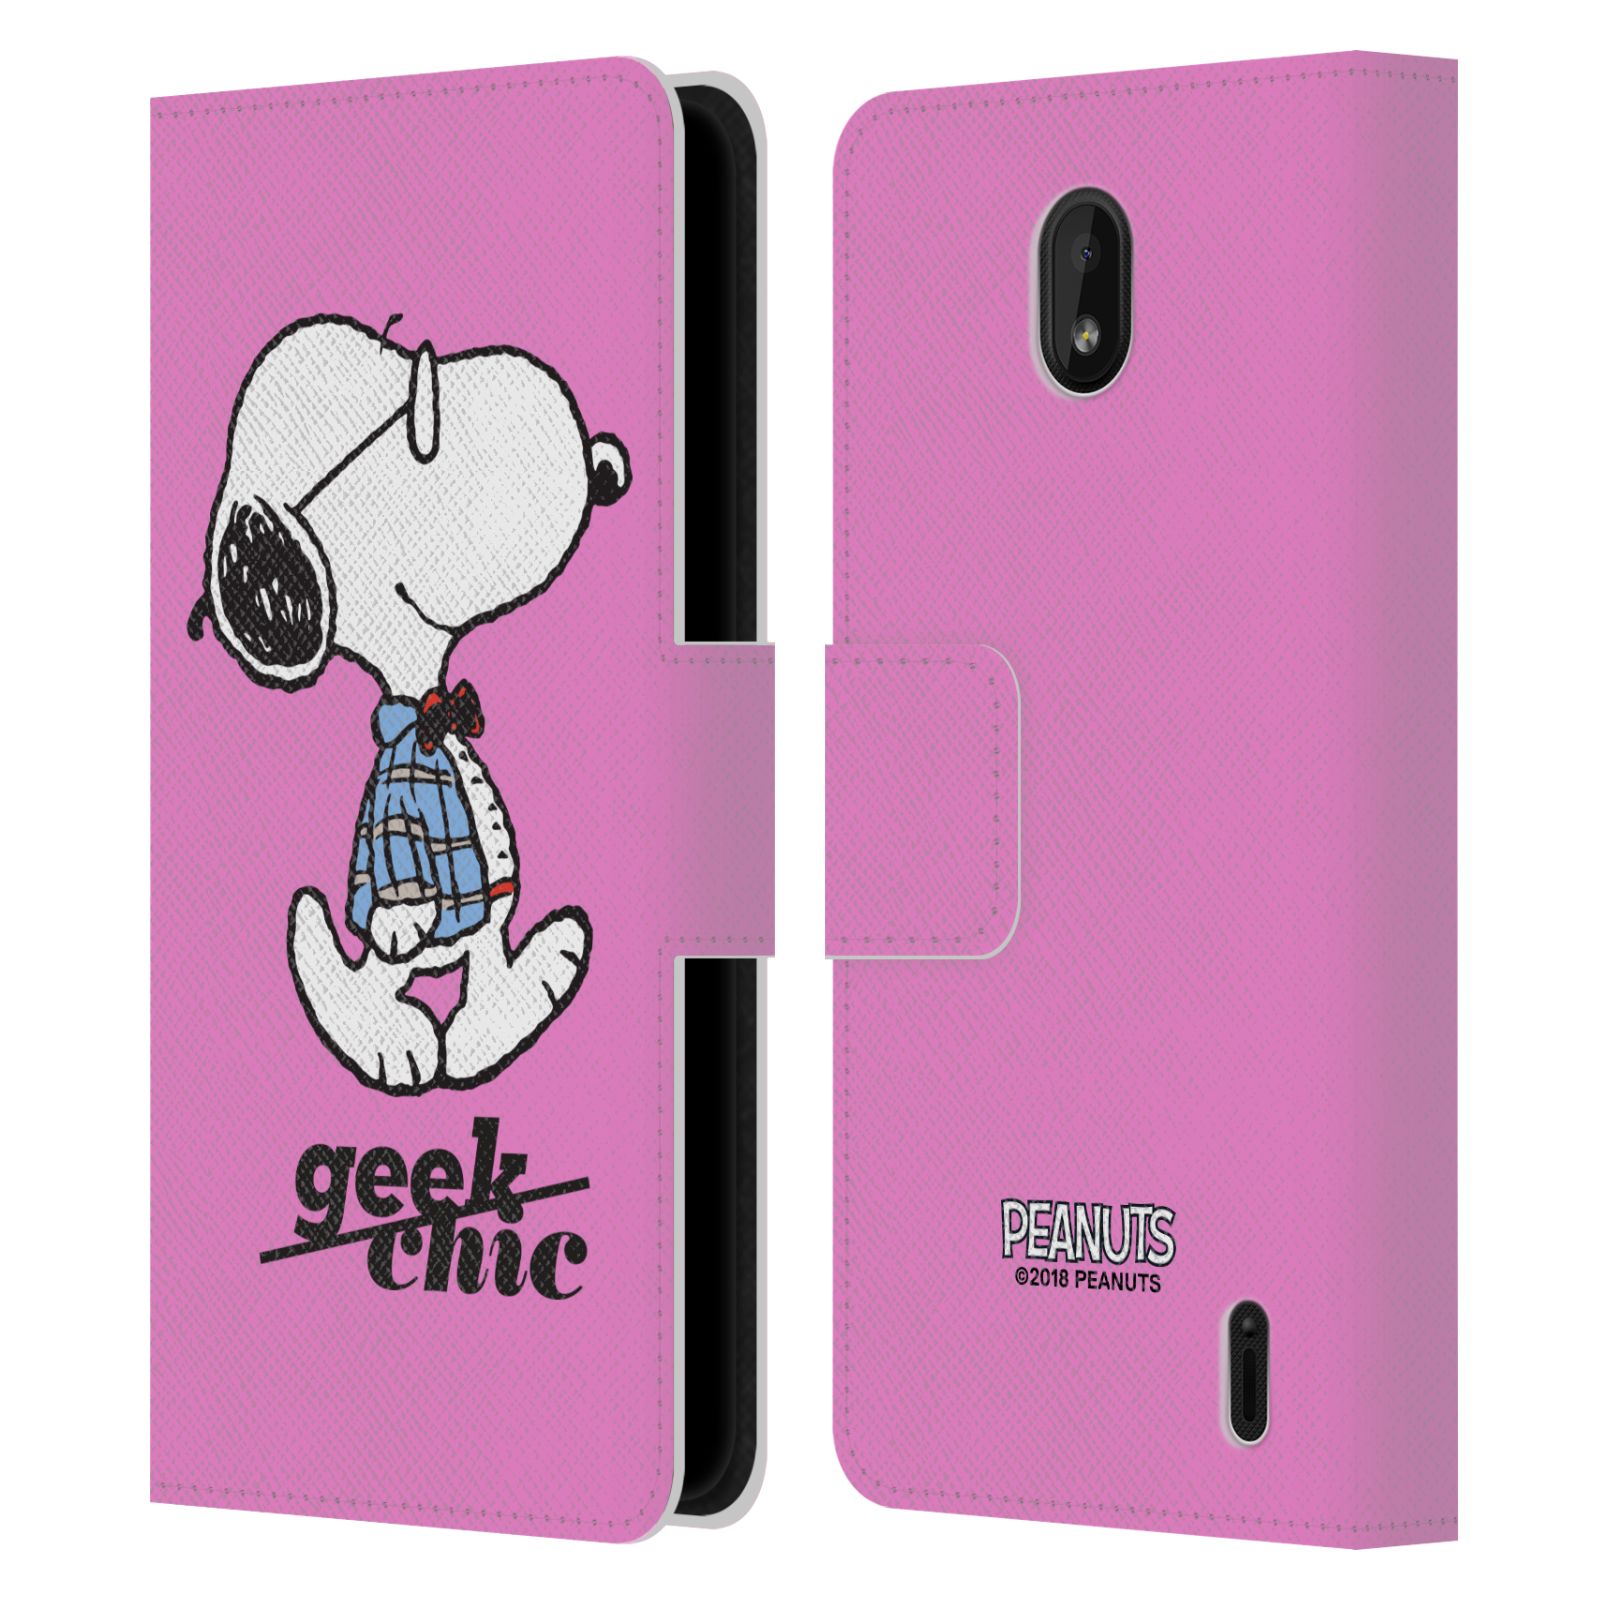 Pouzdro na mobil Nokia 1 PLUS - Head Case - Peanuts - růžový pejsek snoopy nerd